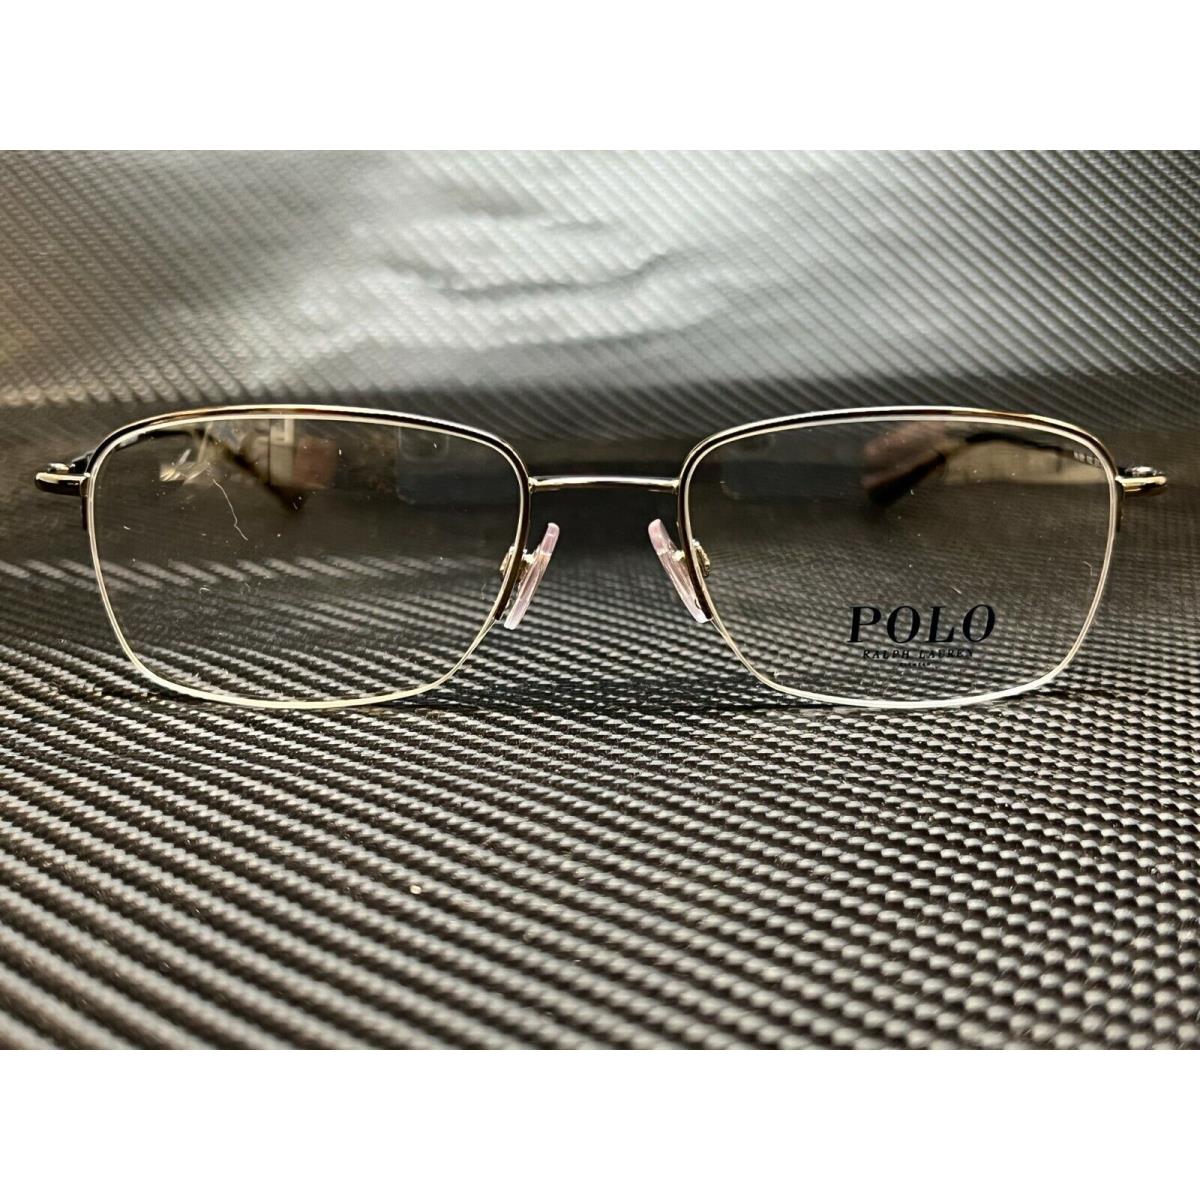 Ralph Lauren eyeglasses  - Frame: Beige 0